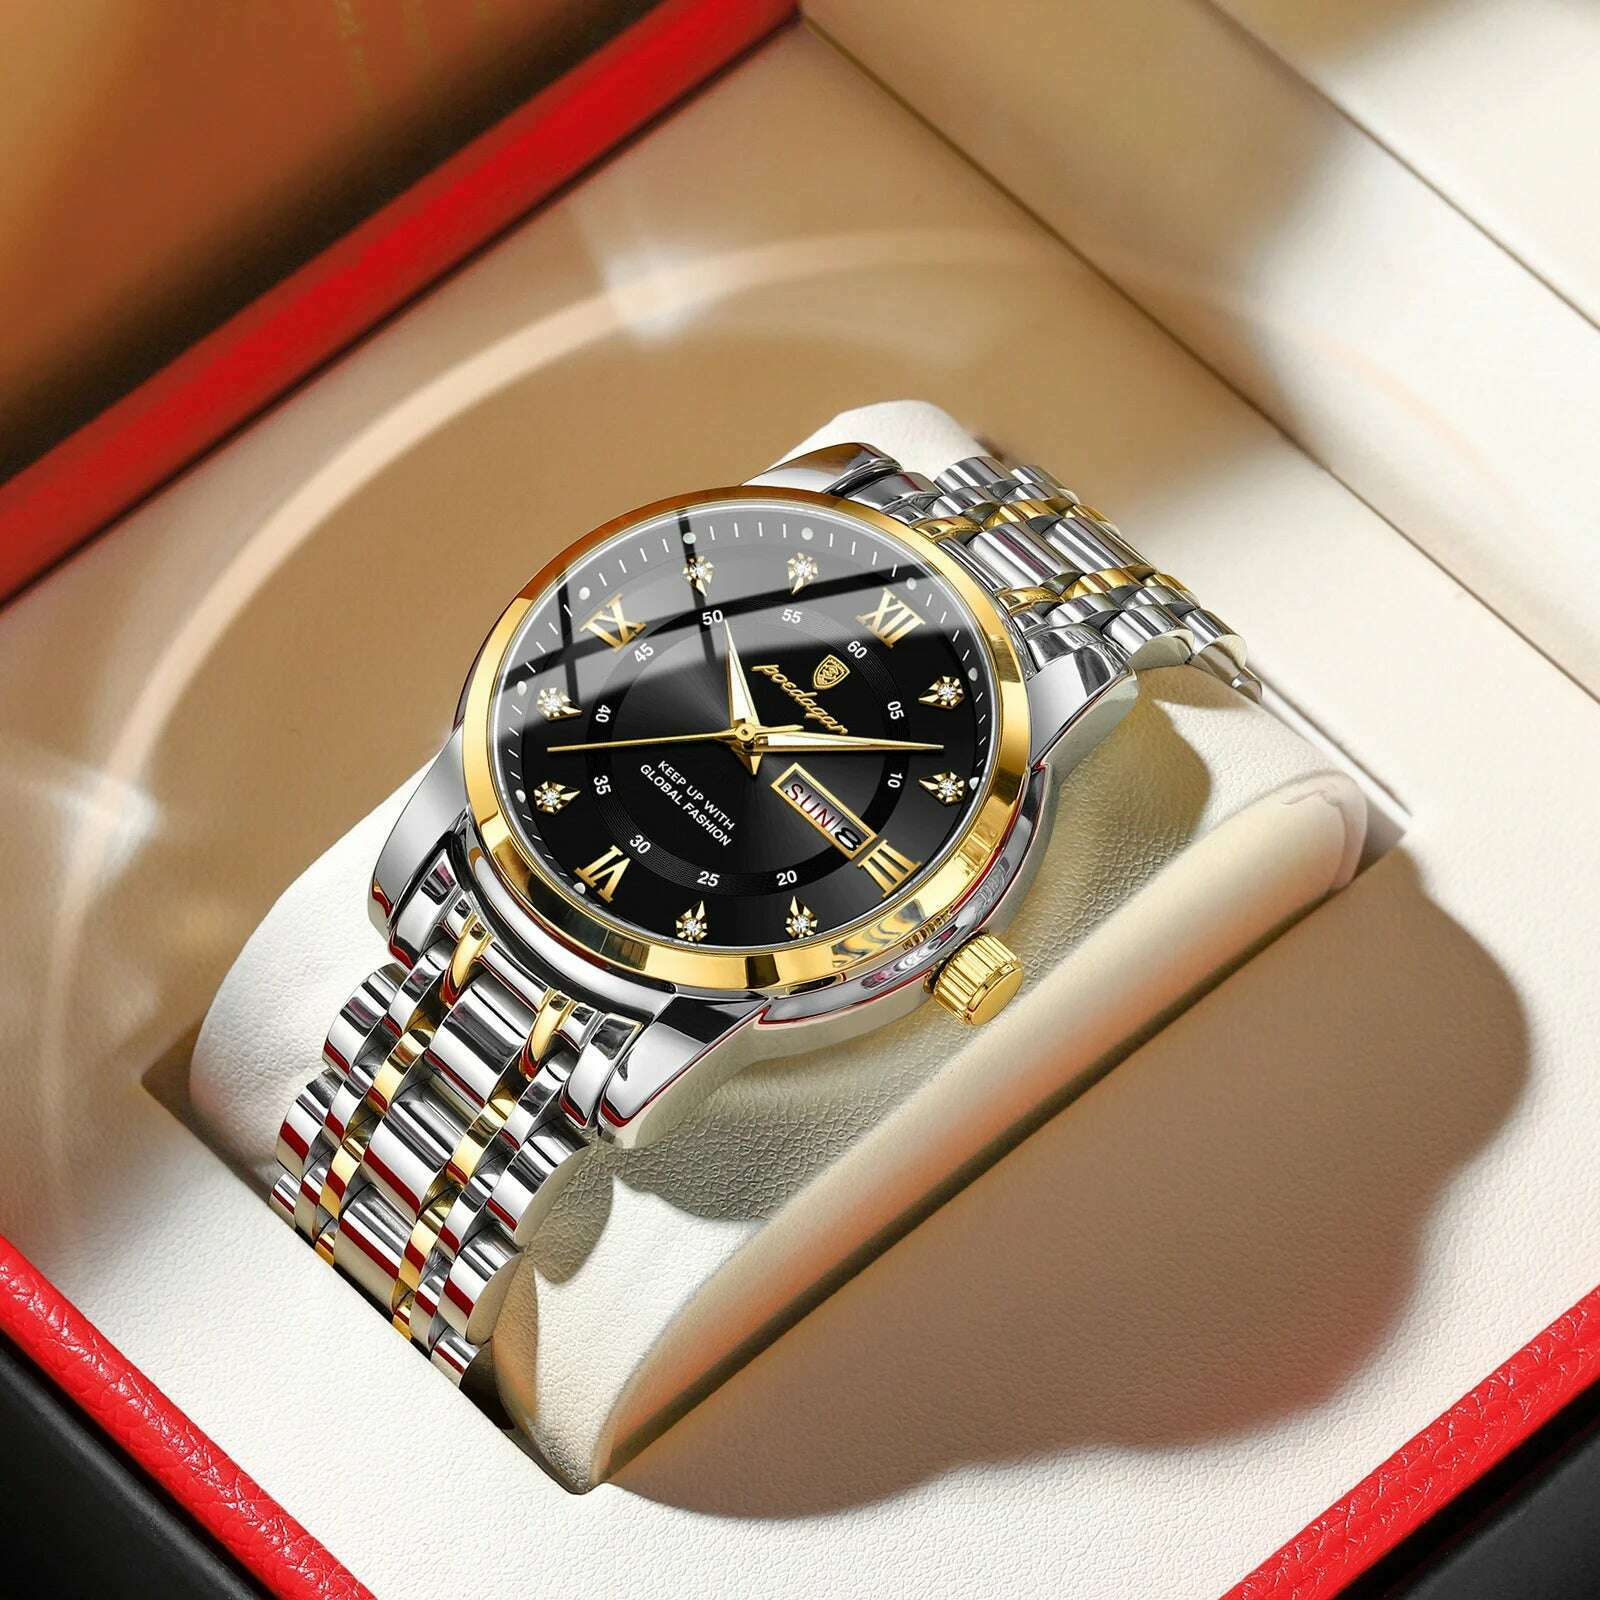 KIMLUD, POEDAGAR Luxury Watch for Man Elegant Date Week Waterproof Luminous Men Watch Quartz Stainless Steel Sports Men's Watches reloj, Gold Black, KIMLUD Women's Clothes